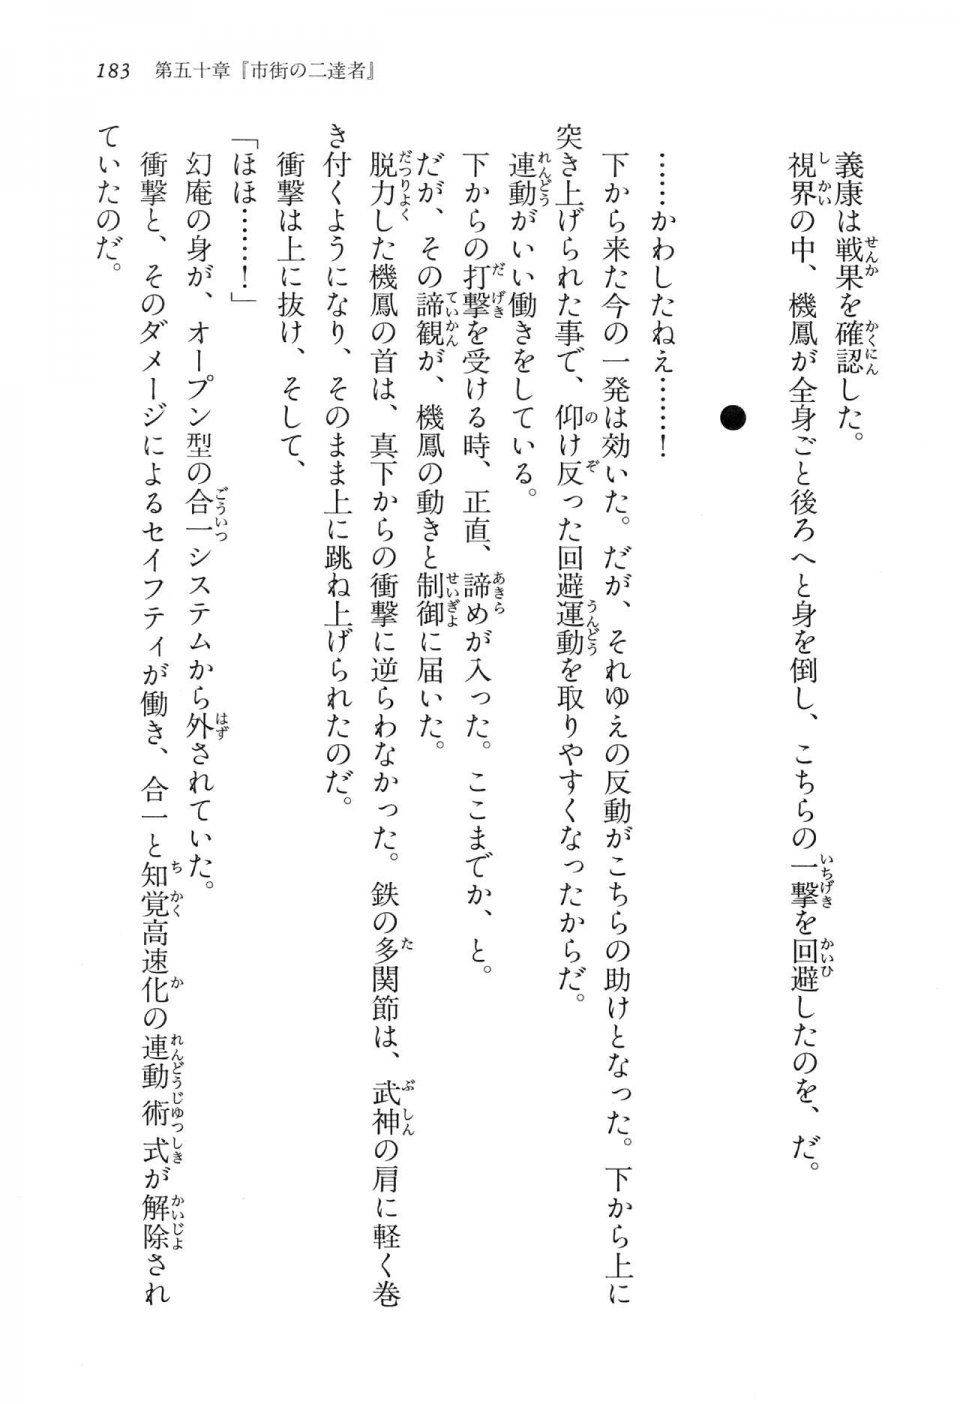 Kyoukai Senjou no Horizon LN Vol 15(6C) Part 1 - Photo #183